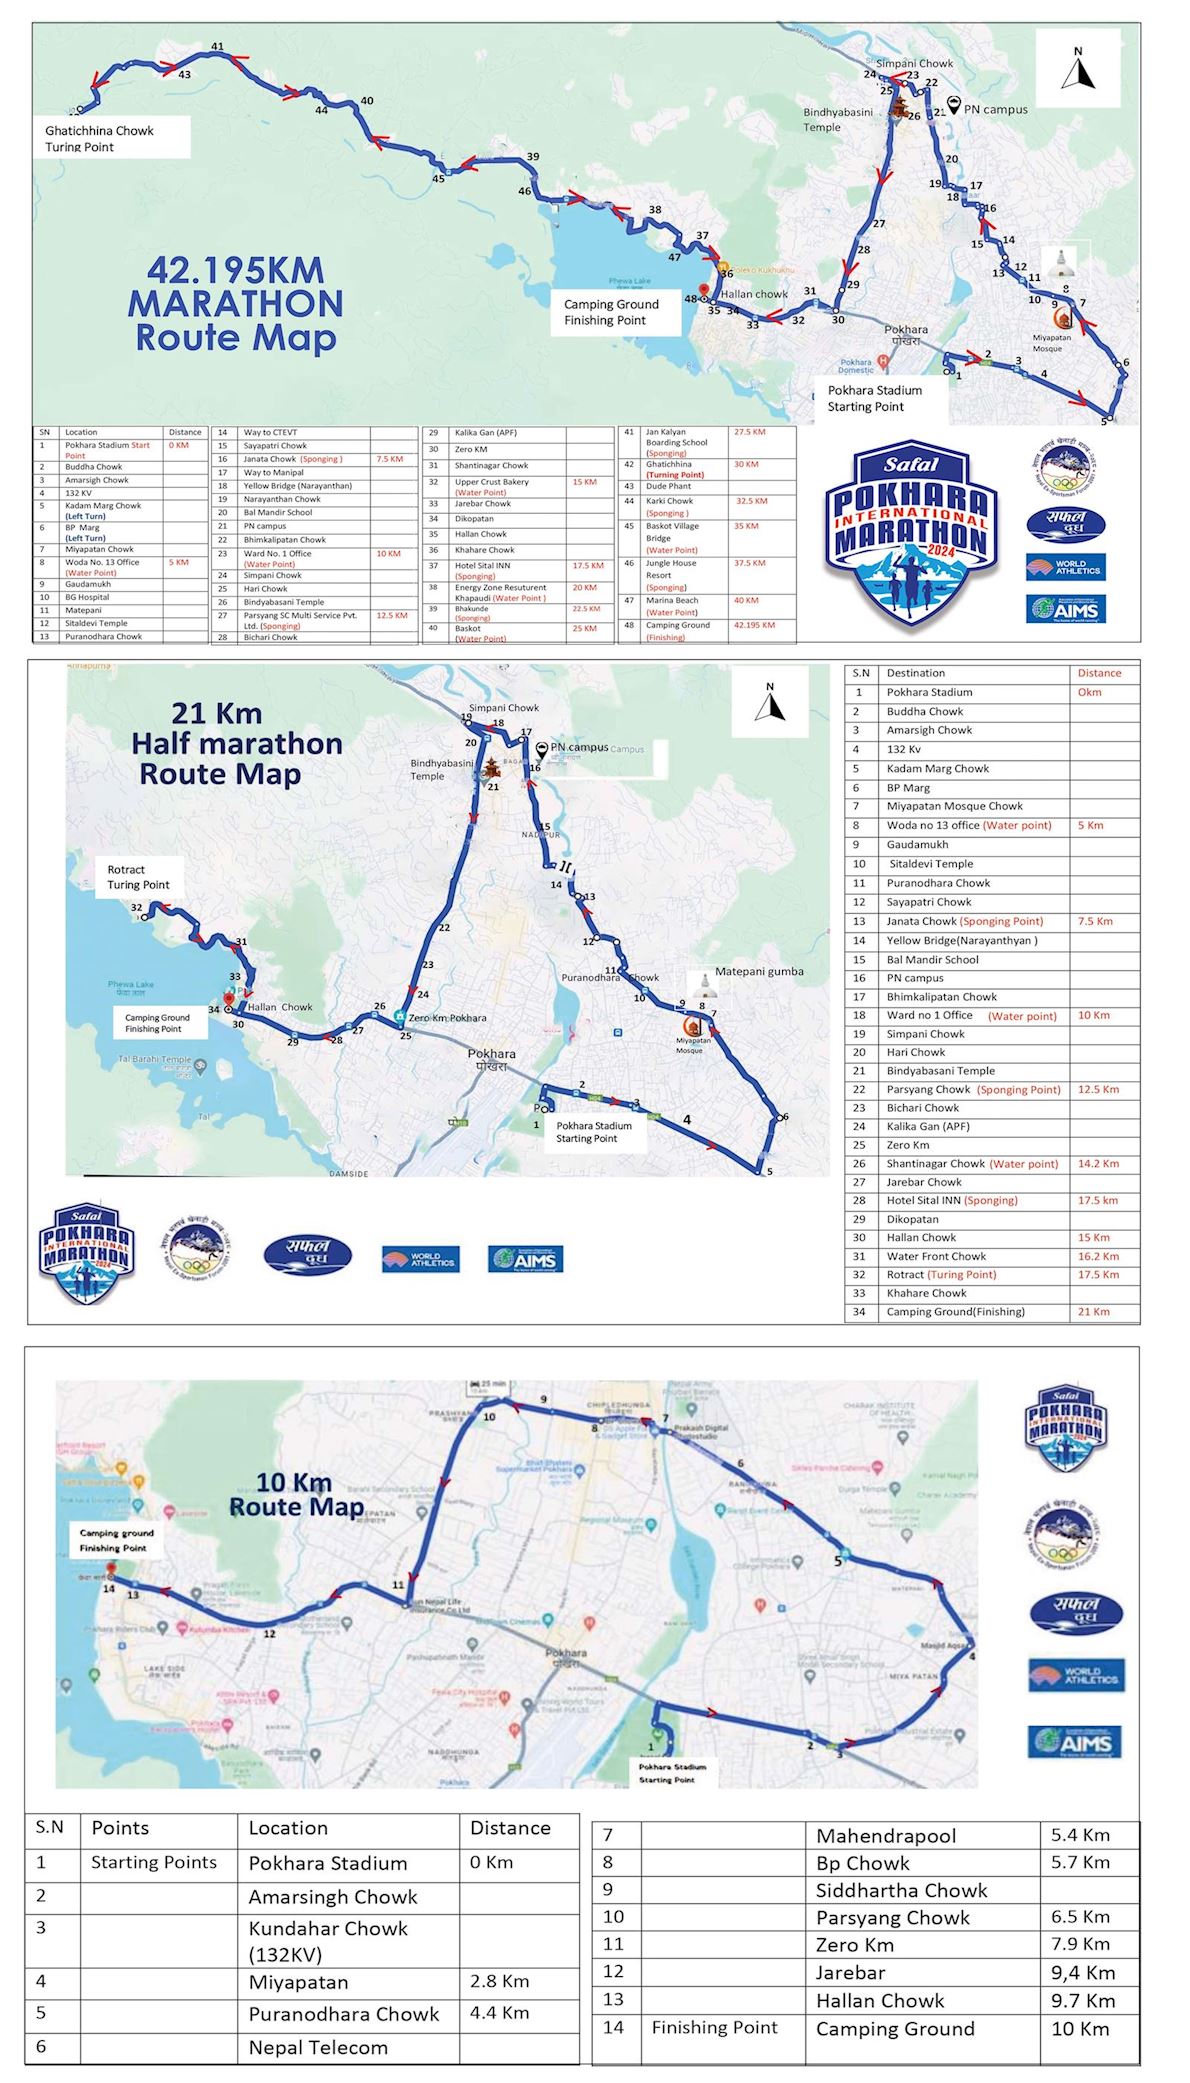 Pokhara International Marathon 路线图